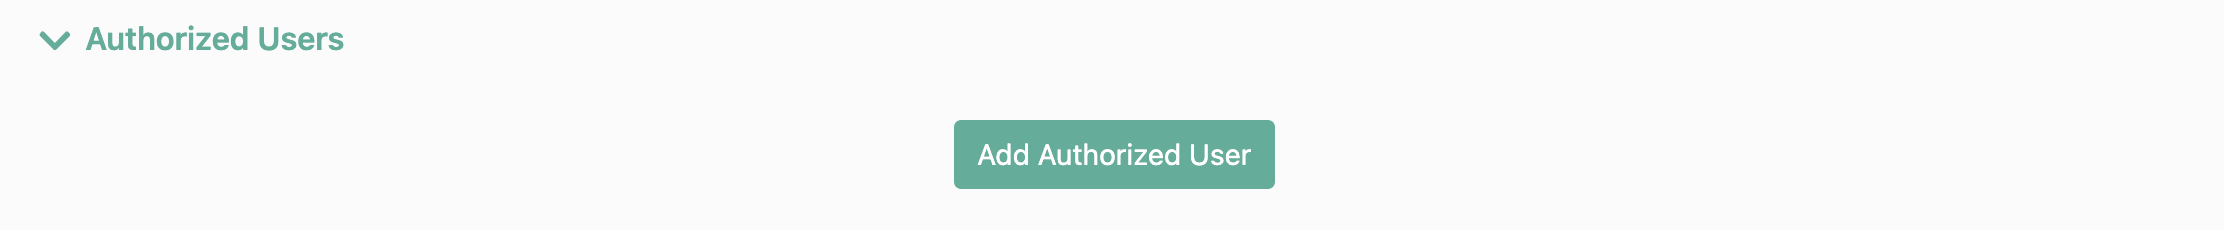 add authorized user